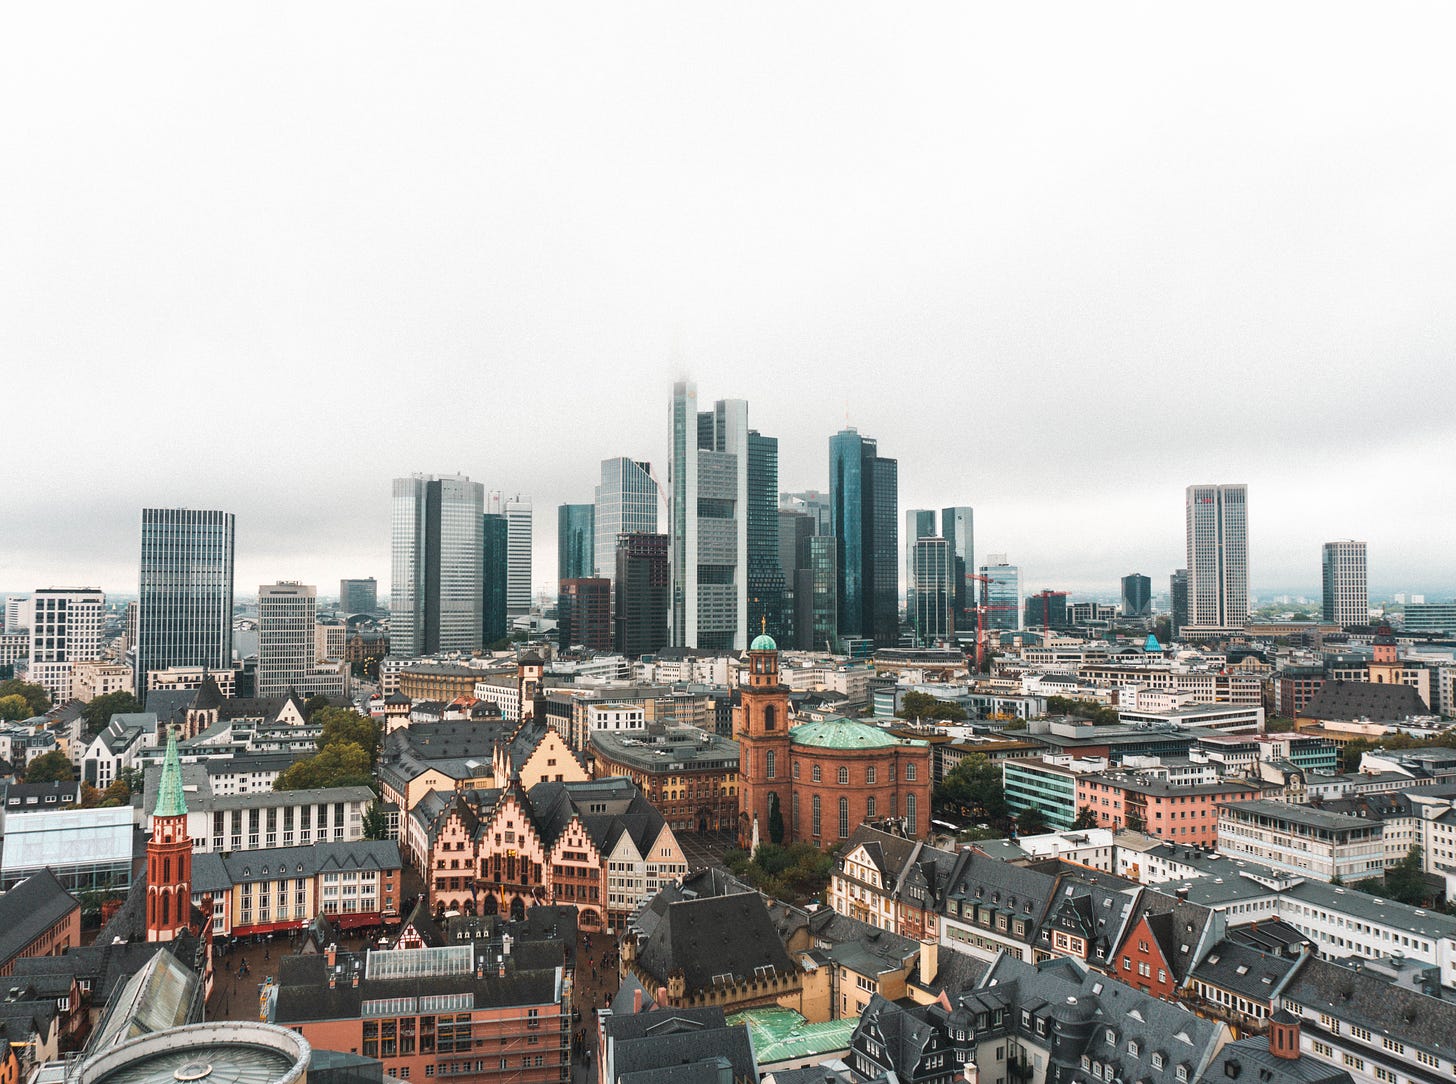 Frankfurt skyline. Photo by Lukas D. on Unsplash